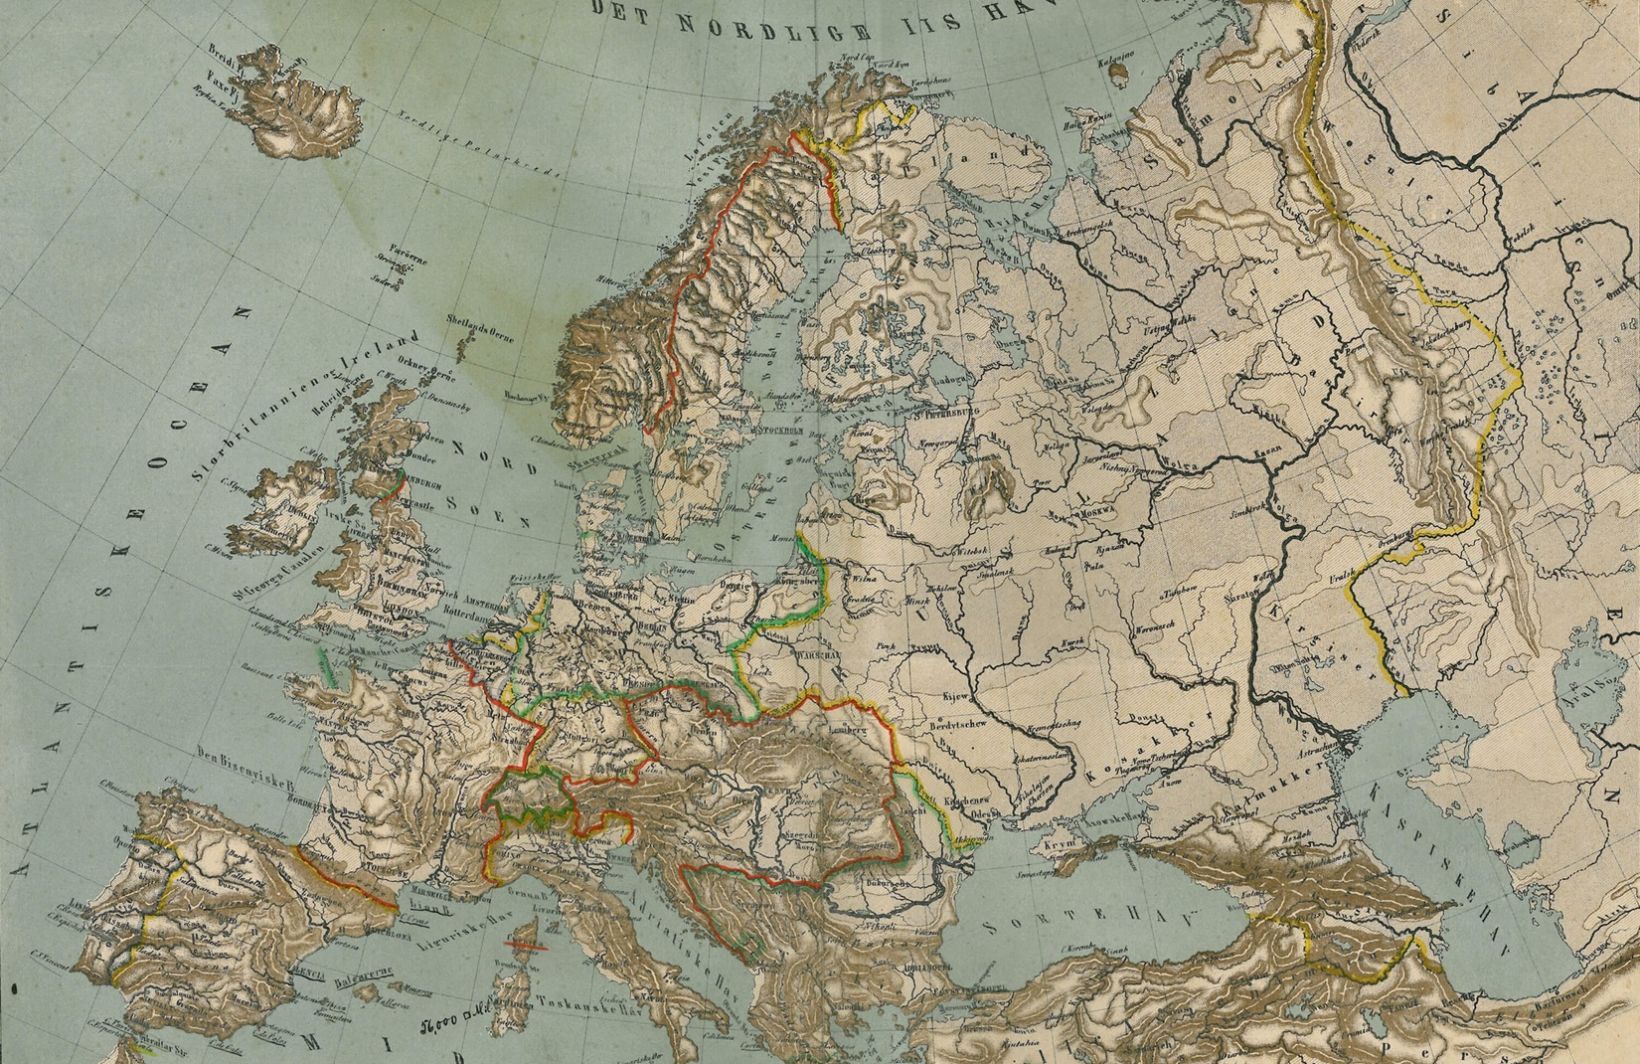 Antique Map of Europe Wallpaper Mural. Hovia UK. Europe wallpaper, Mural wallpaper, Mural